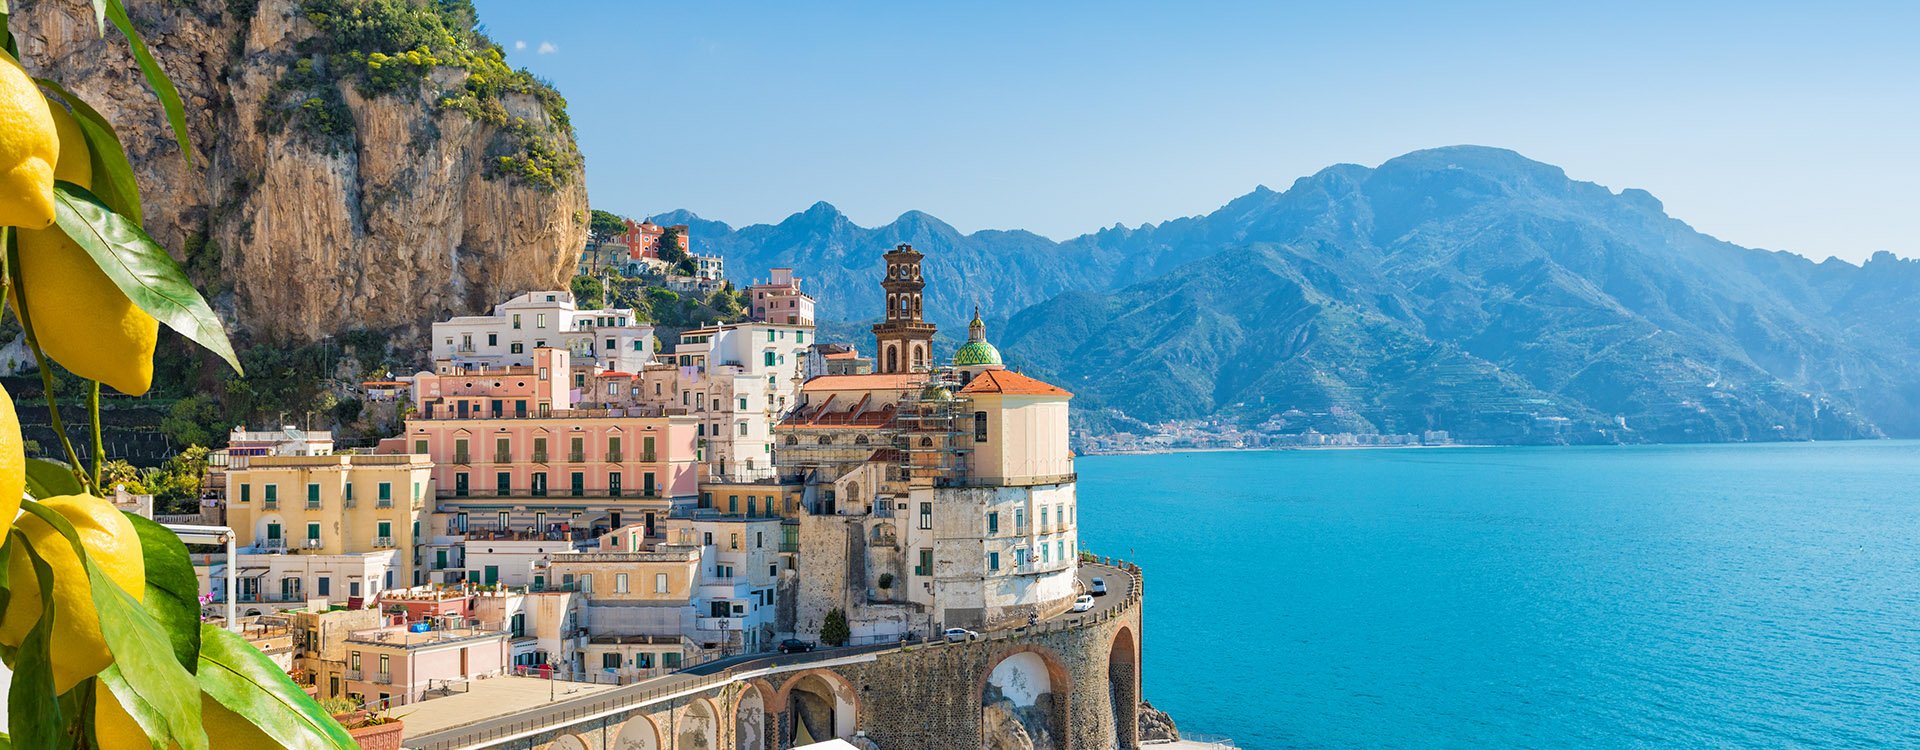 Small city Atrani on Amalfi Coast in province of Salerno, Campania region, Italy.